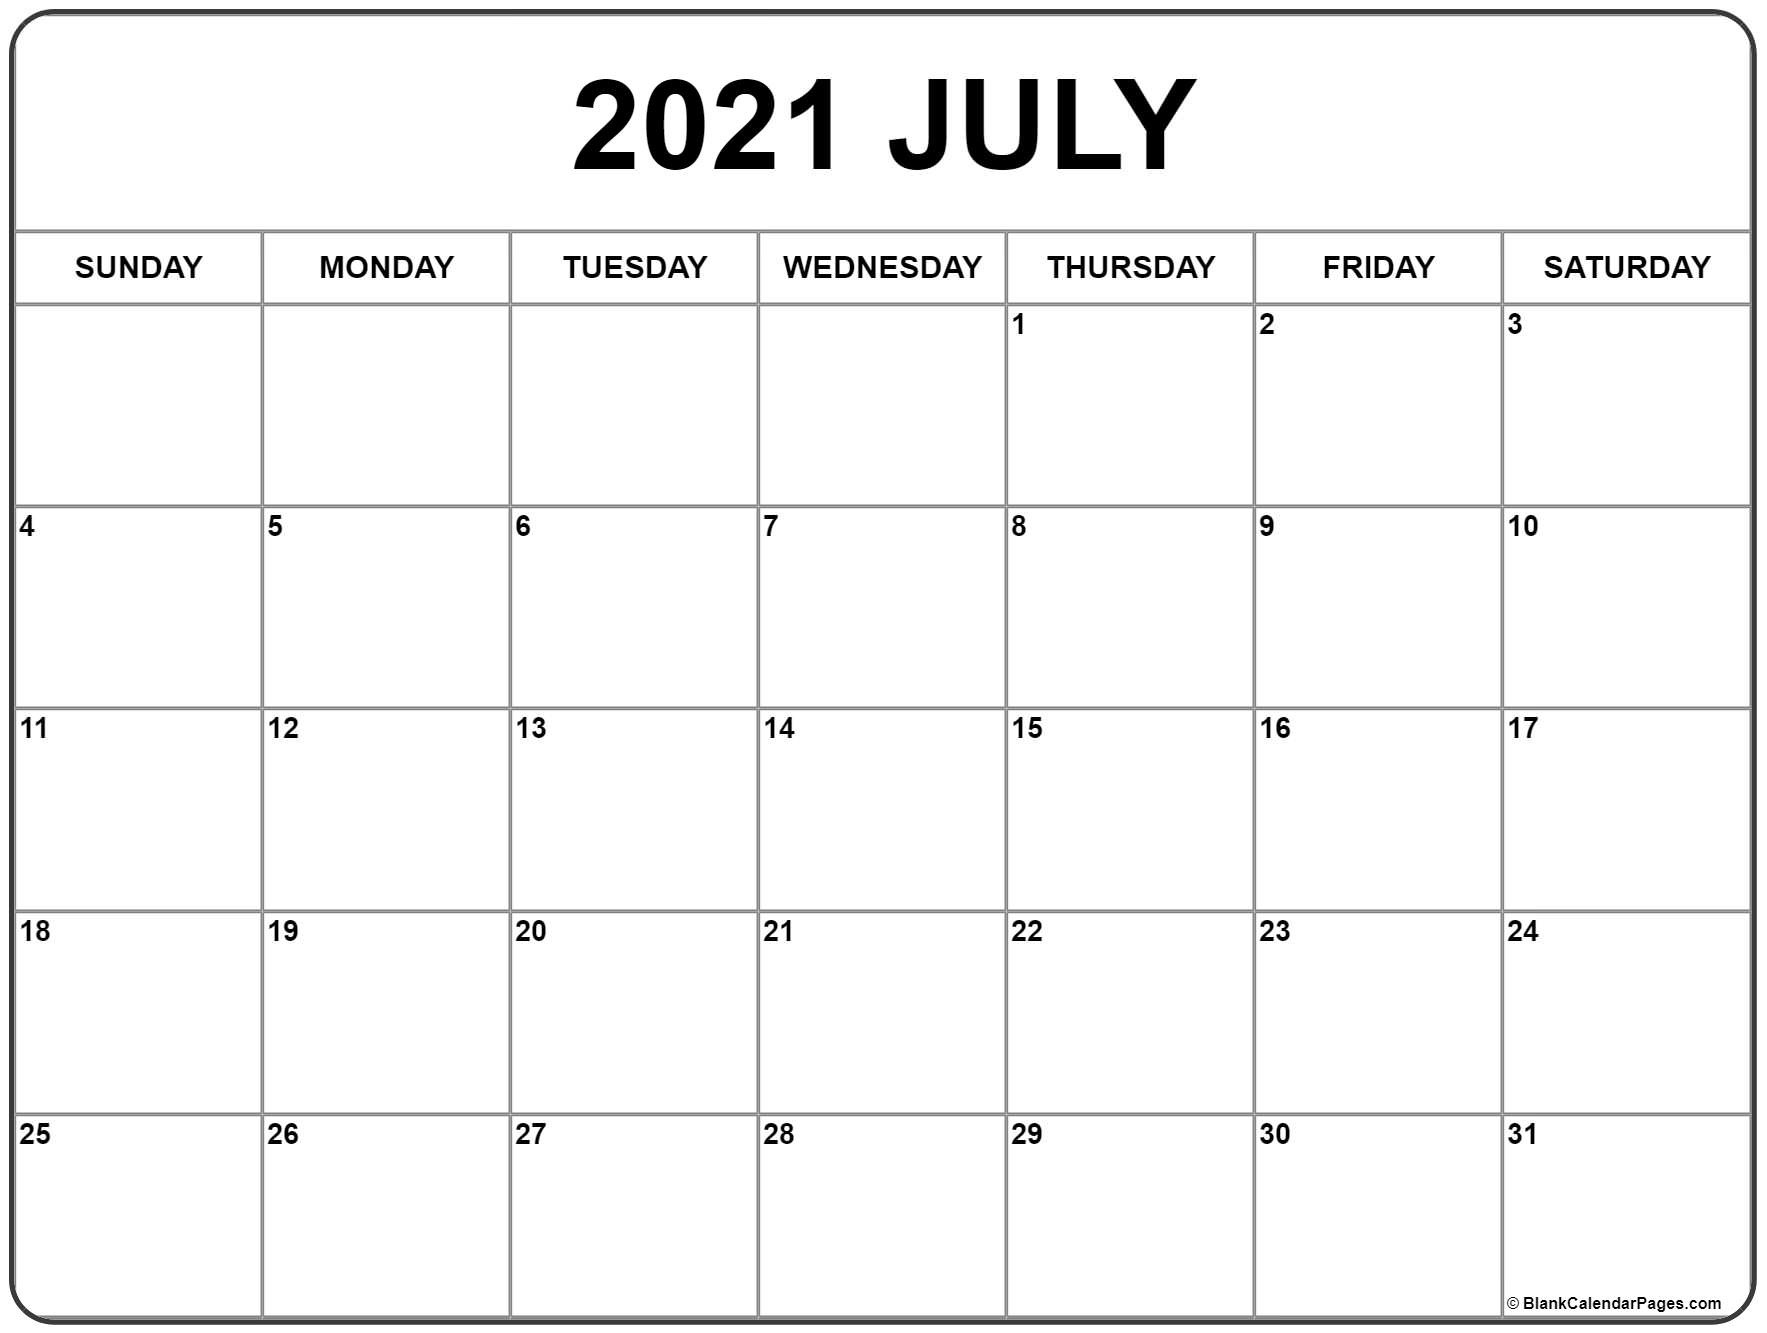 July 2021 Calendar | Free Printable Monthly Calendars-8X11 Landscape Printable Monthly Calendar 2021